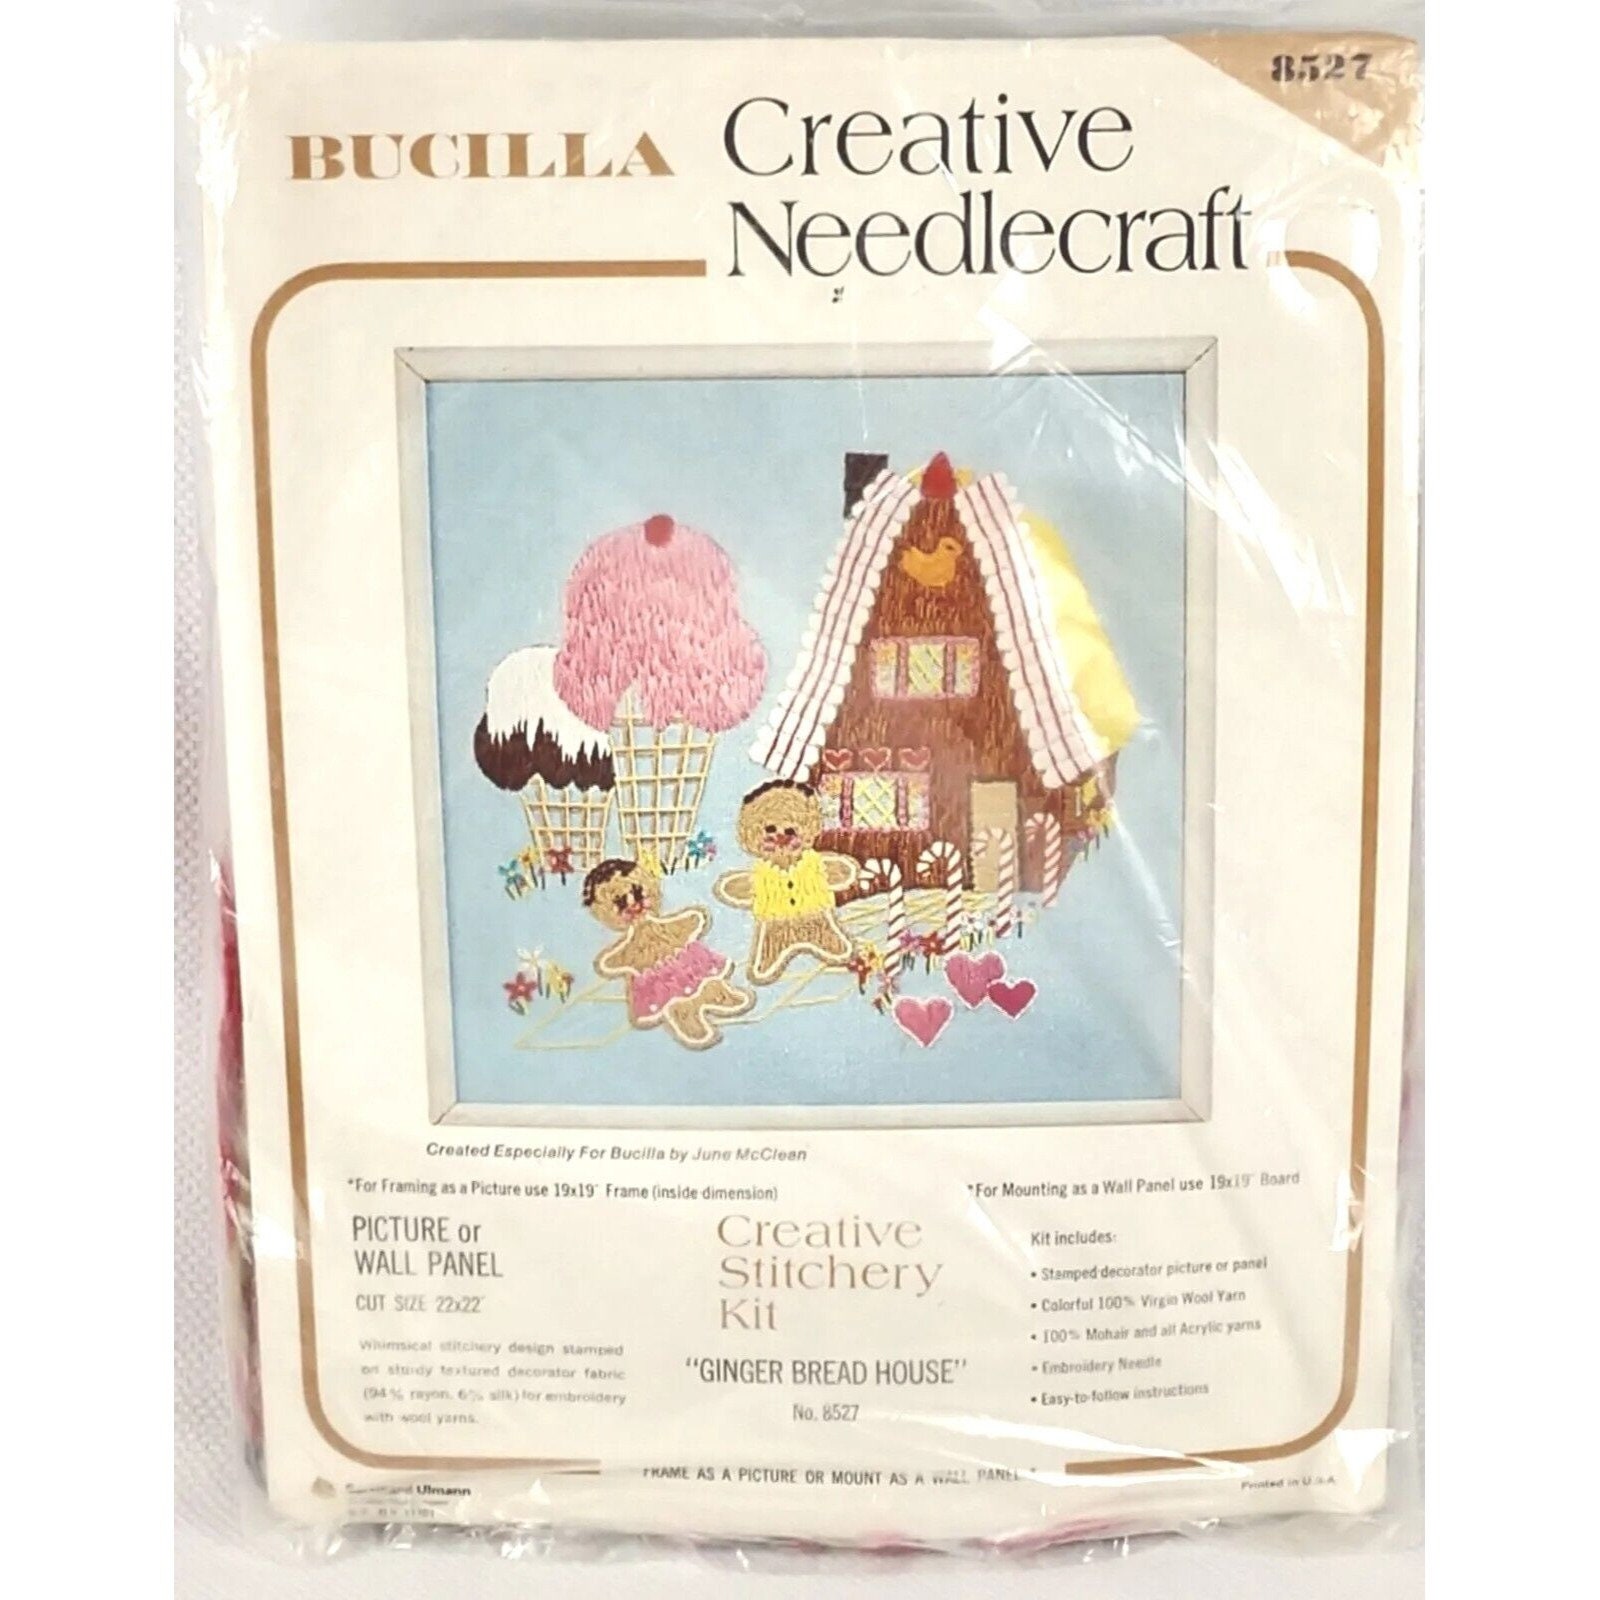 Bucilla Kit: 'christmas Angels' Felt Christmas Ornament Stitchery Kit,  89493E 